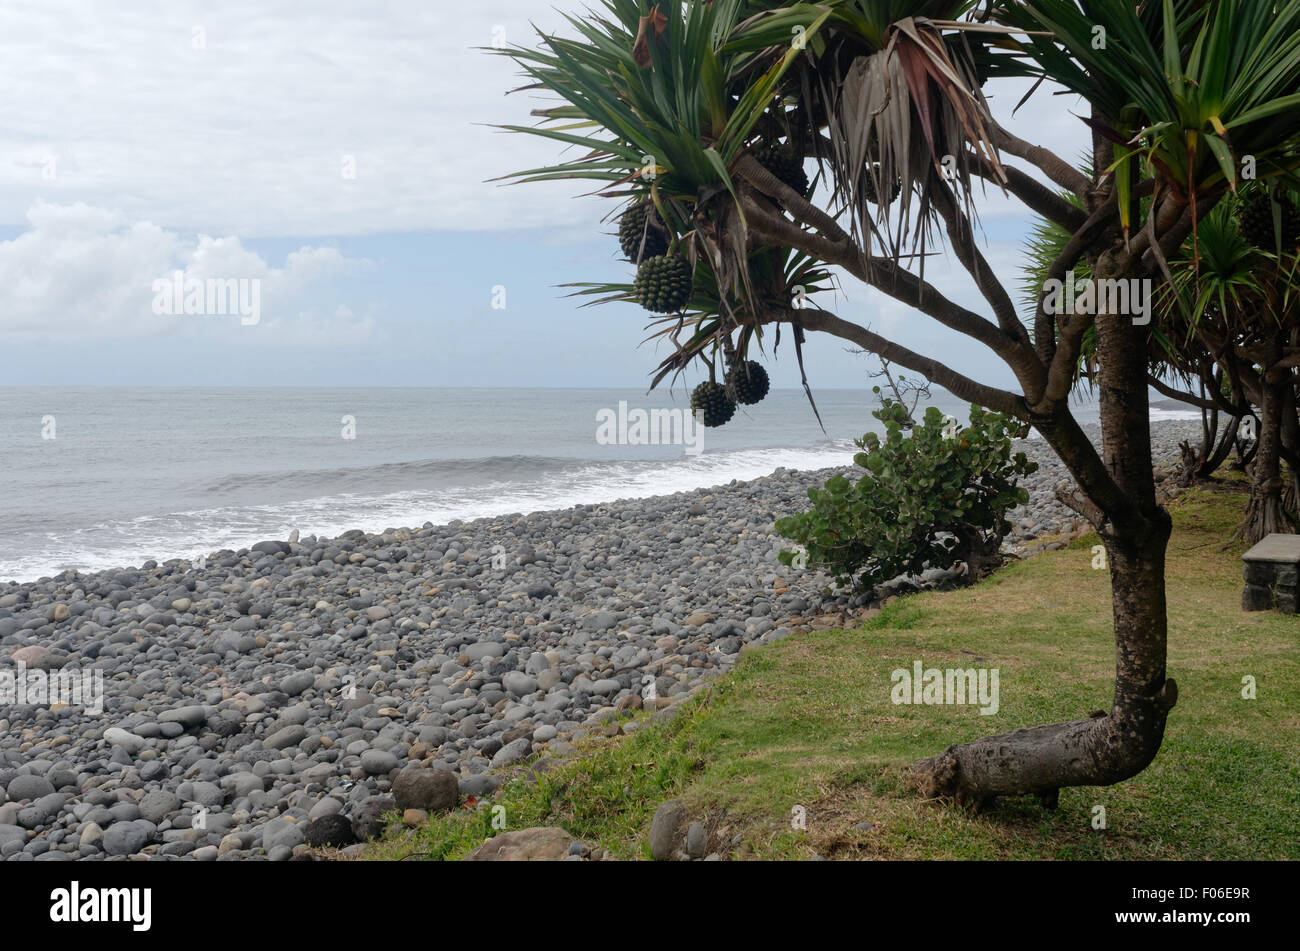 Aug. 8, 2015 - Sainte-AndrÃ, Reunion island, France - This is the shoreline of Saint-André, east coast of Reunion island, where the flight MH370 flaperon debris was found on july 29, 2015 © Valerie Koch/ZUMA Wire/Alamy Live News Stock Photo